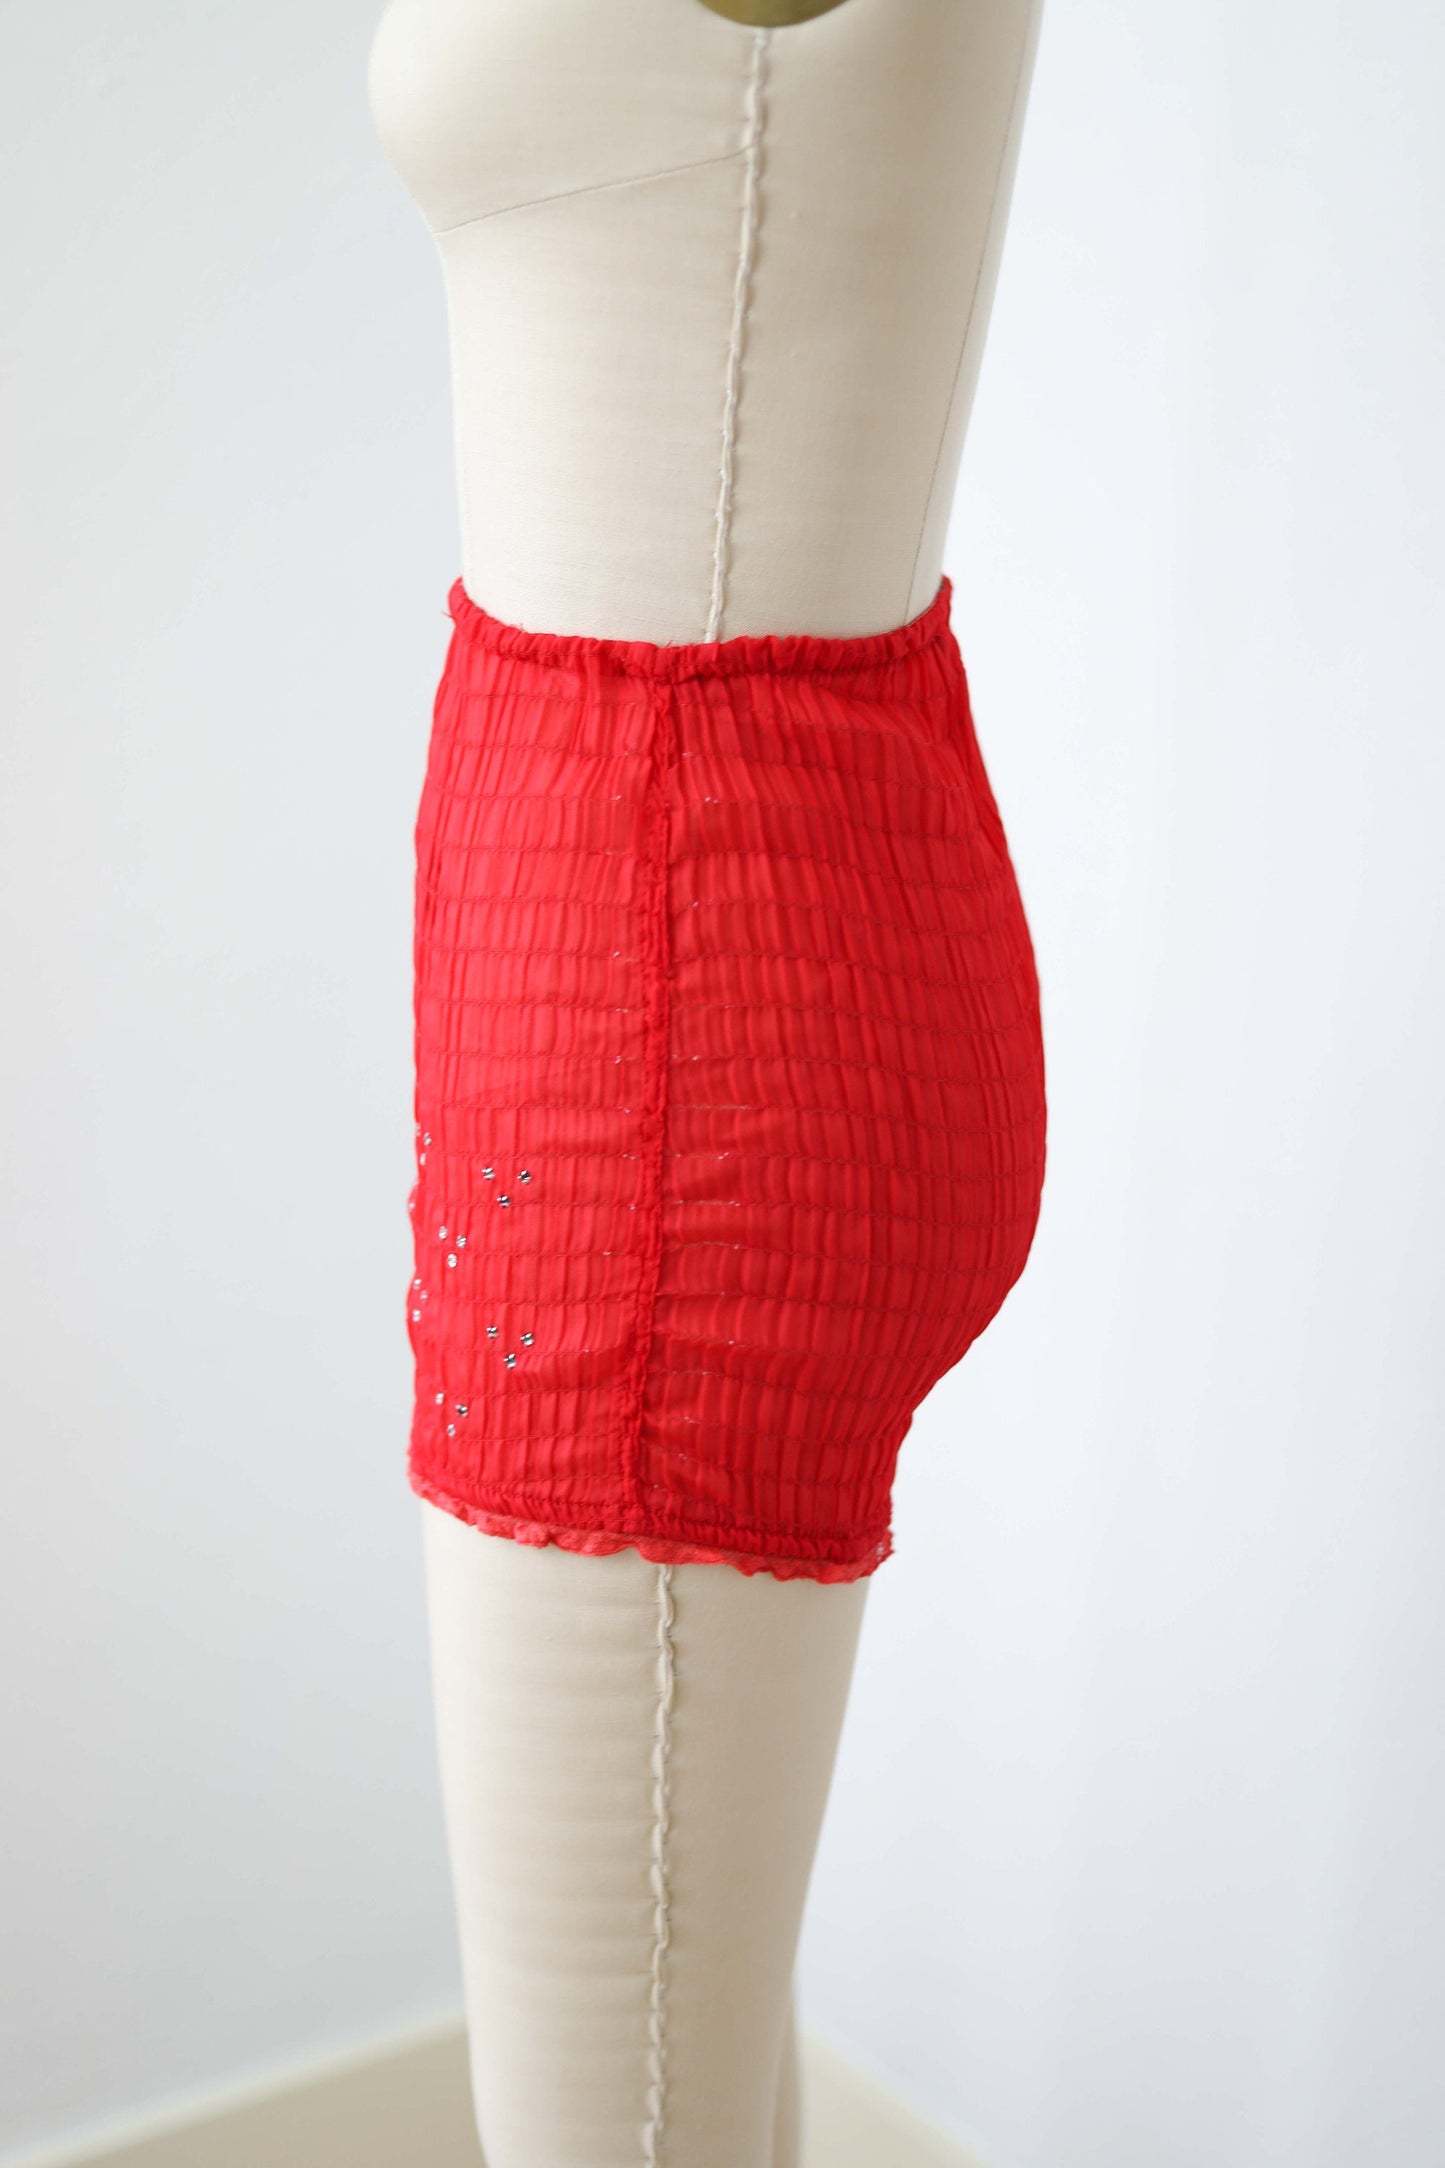 Vintage 1940s Scandalous Red w Rhinestones Shirred Chiffon Bloomer "Gay Baby" by Circe Sheer Nylon Shorts Size XS to S